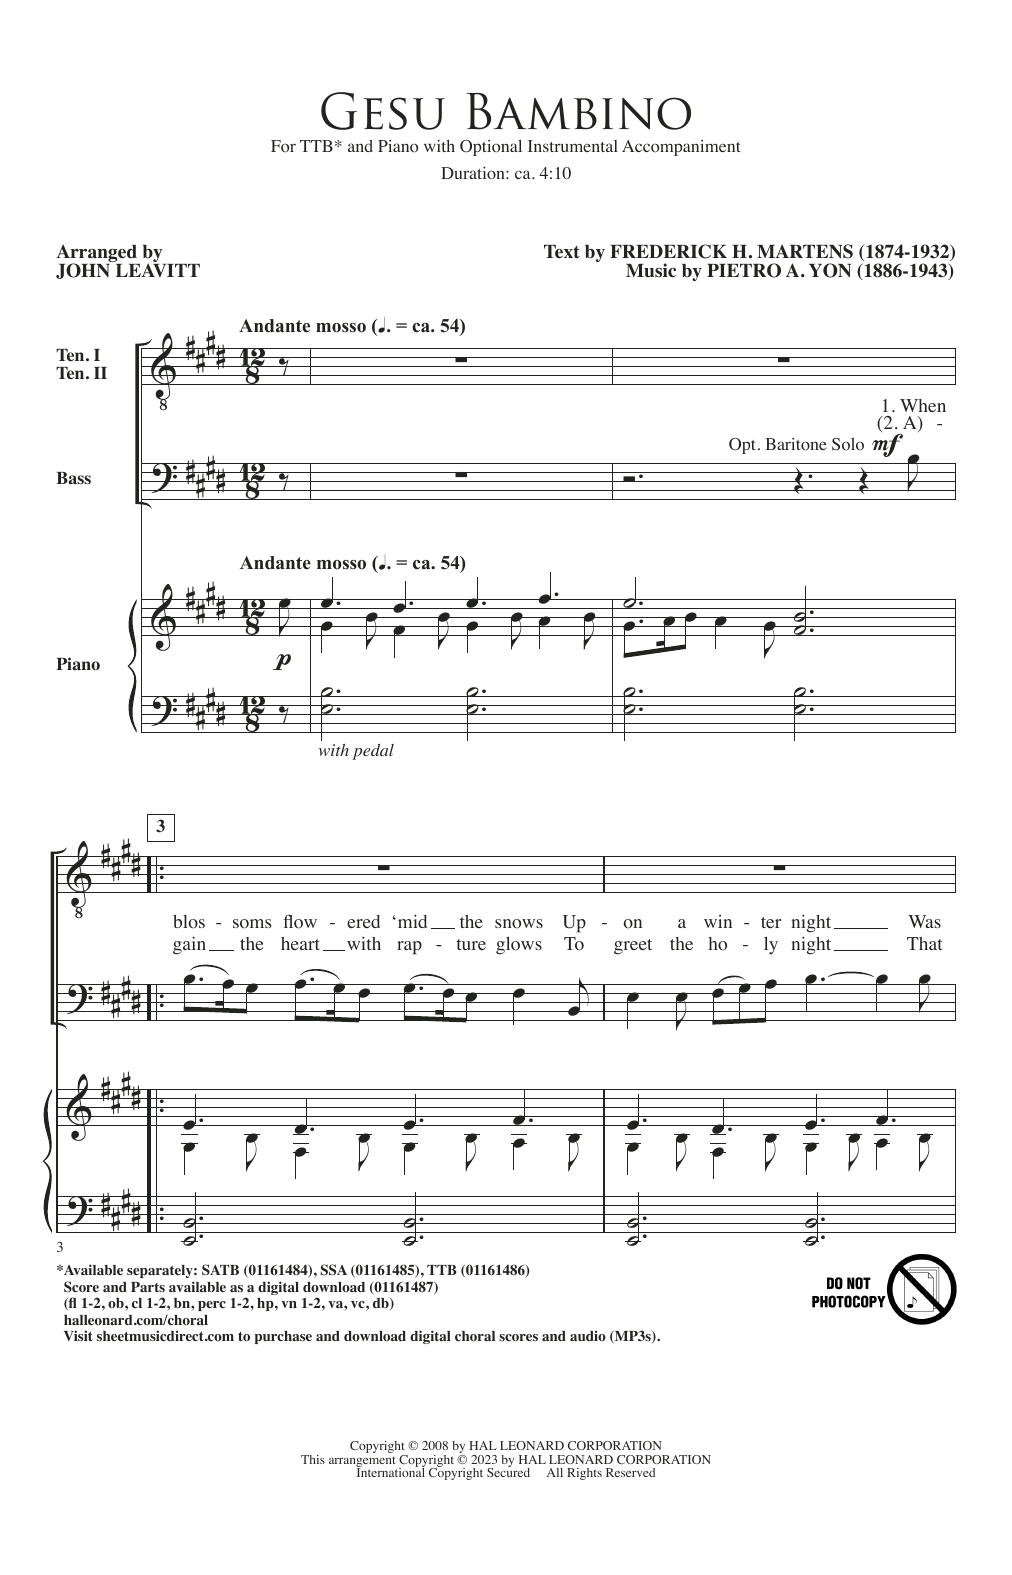 Pietro A. Yon Gesú Bambino (arr. John Leavitt) Sheet Music Notes & Chords for SSA Choir - Download or Print PDF